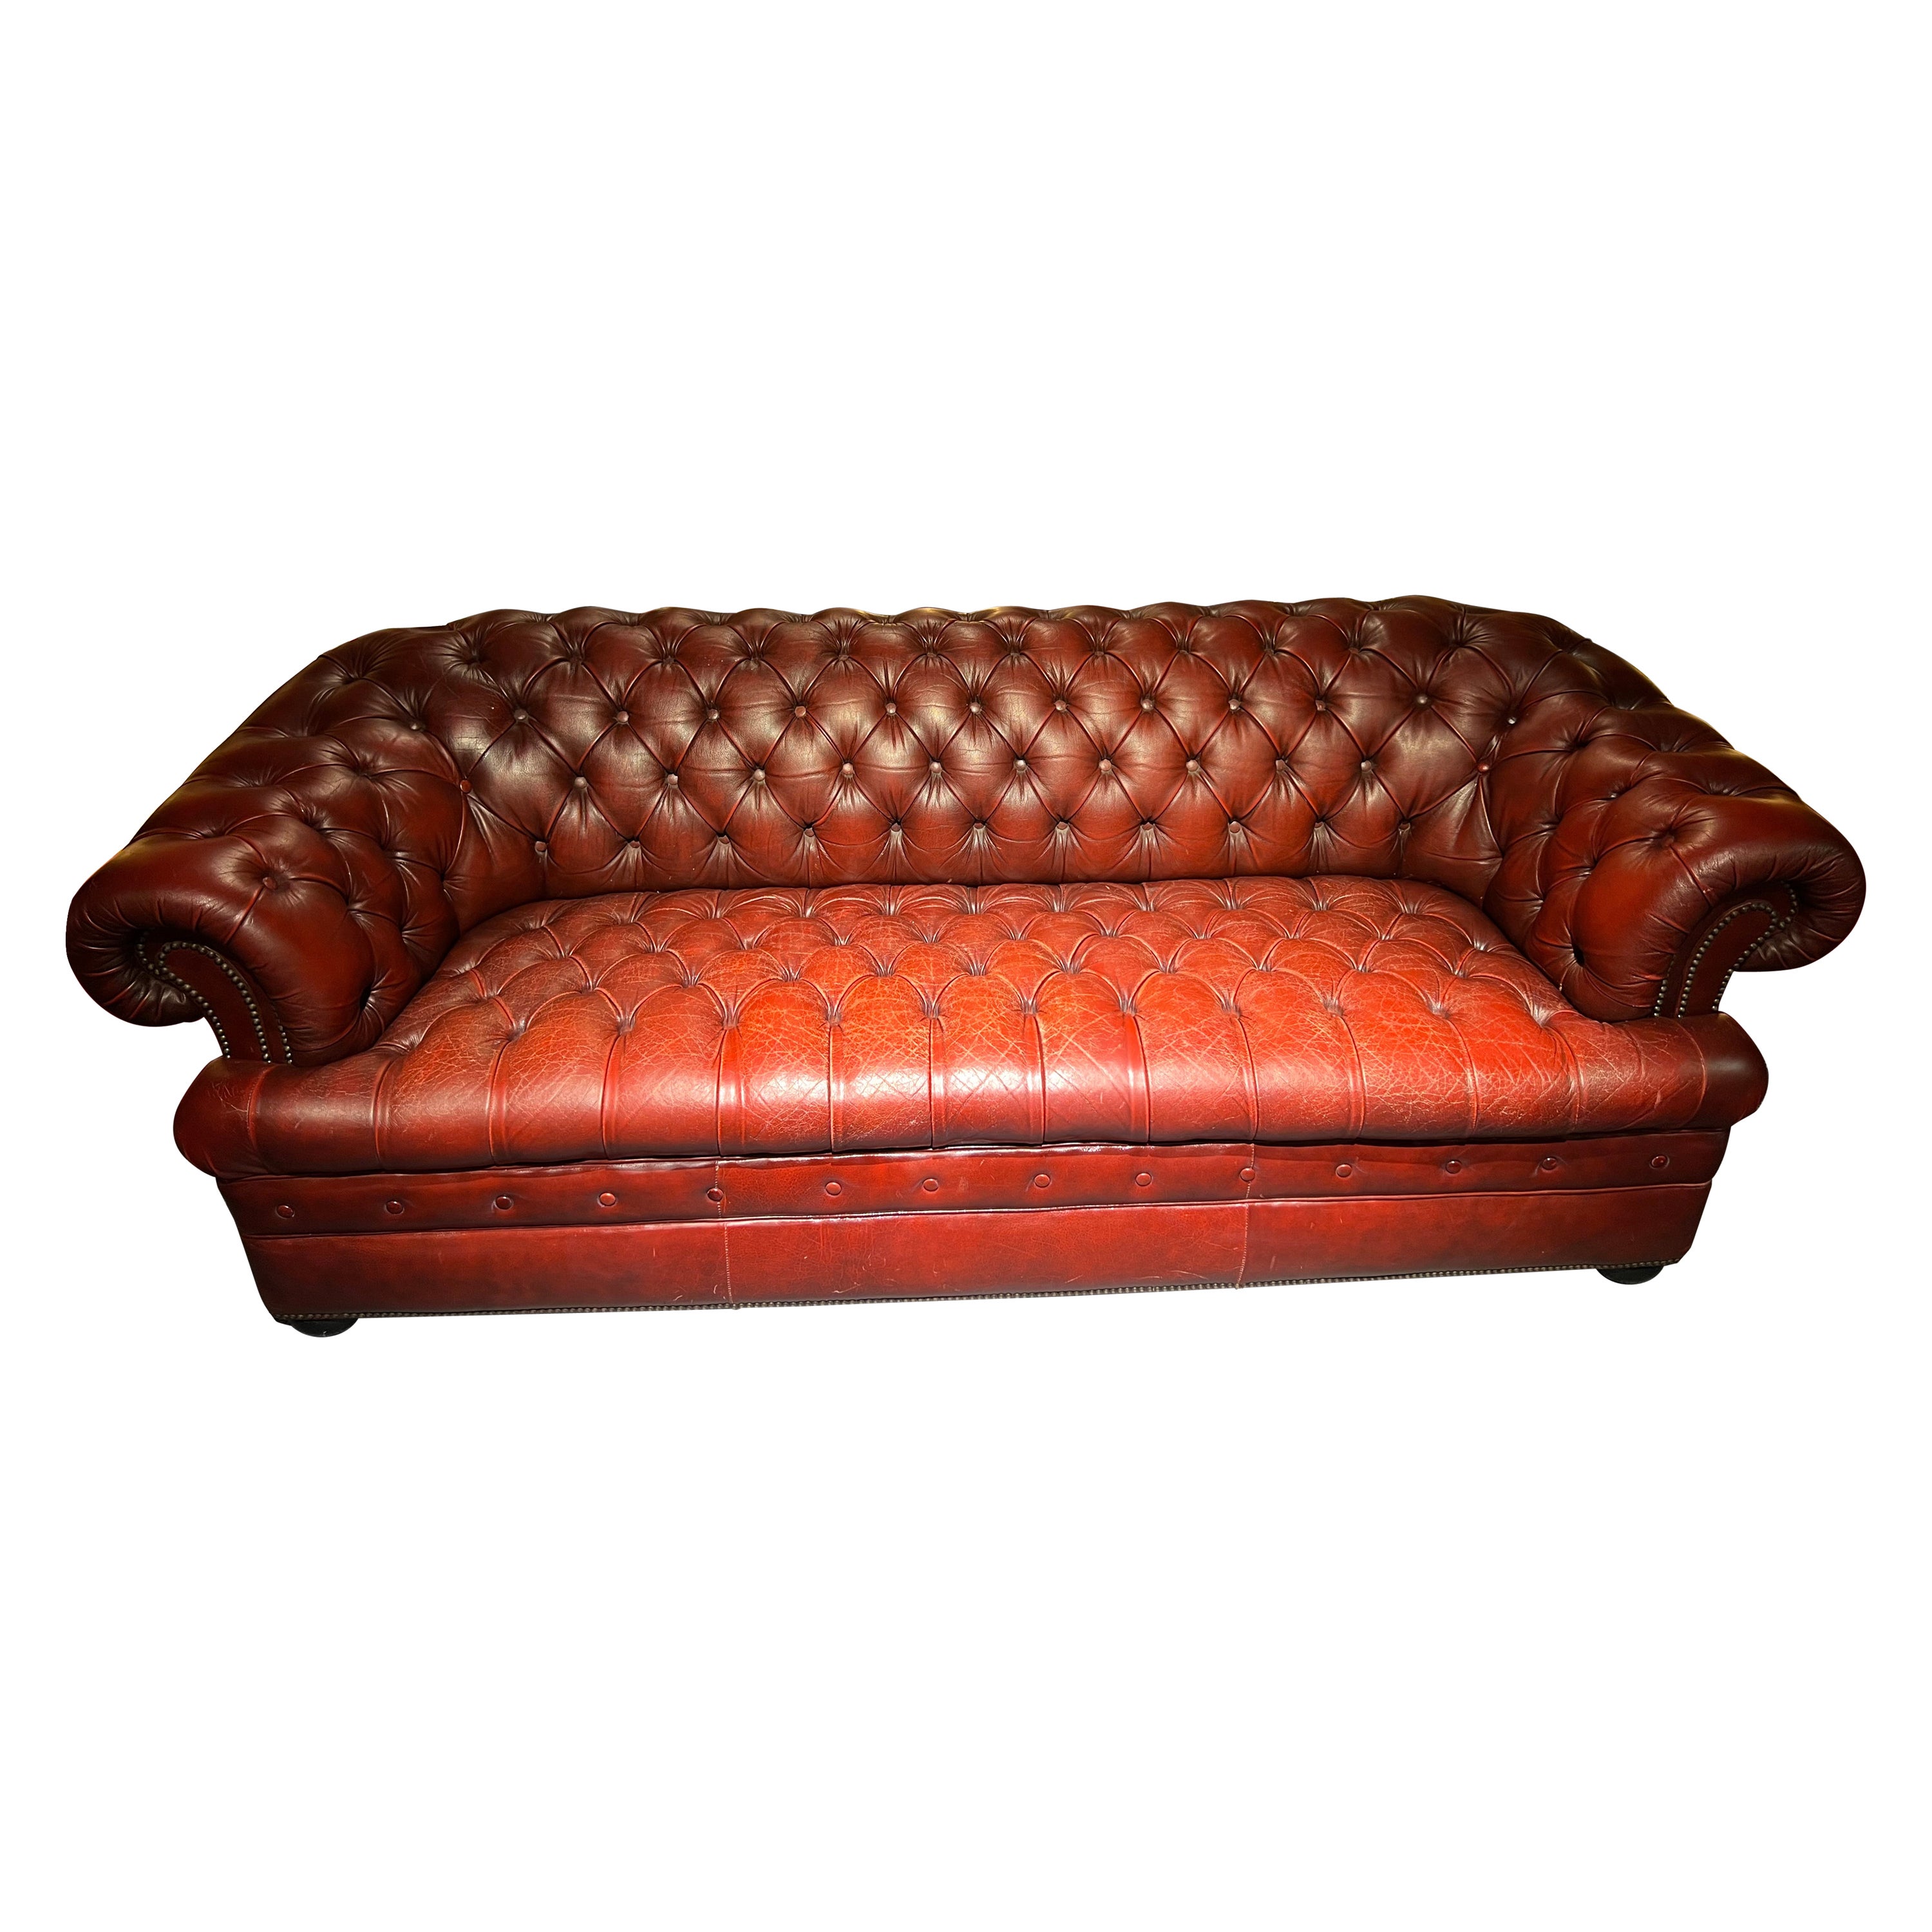 Superbe canapé Chesterfield 3 Seater vintage anglais en cuir rouge